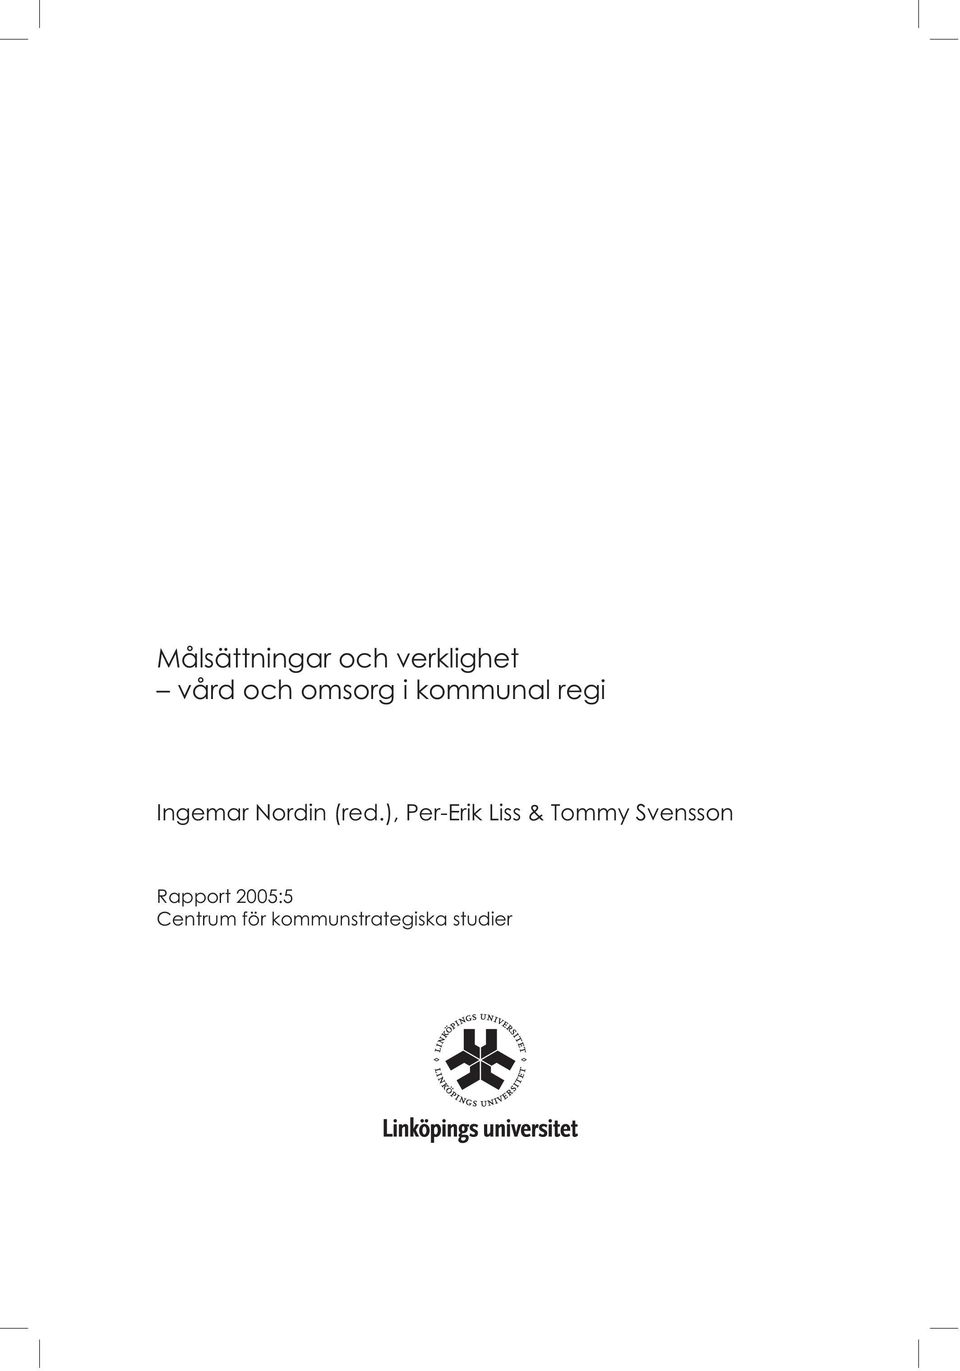 (red.), Per-Erik Liss & Tommy Svensson